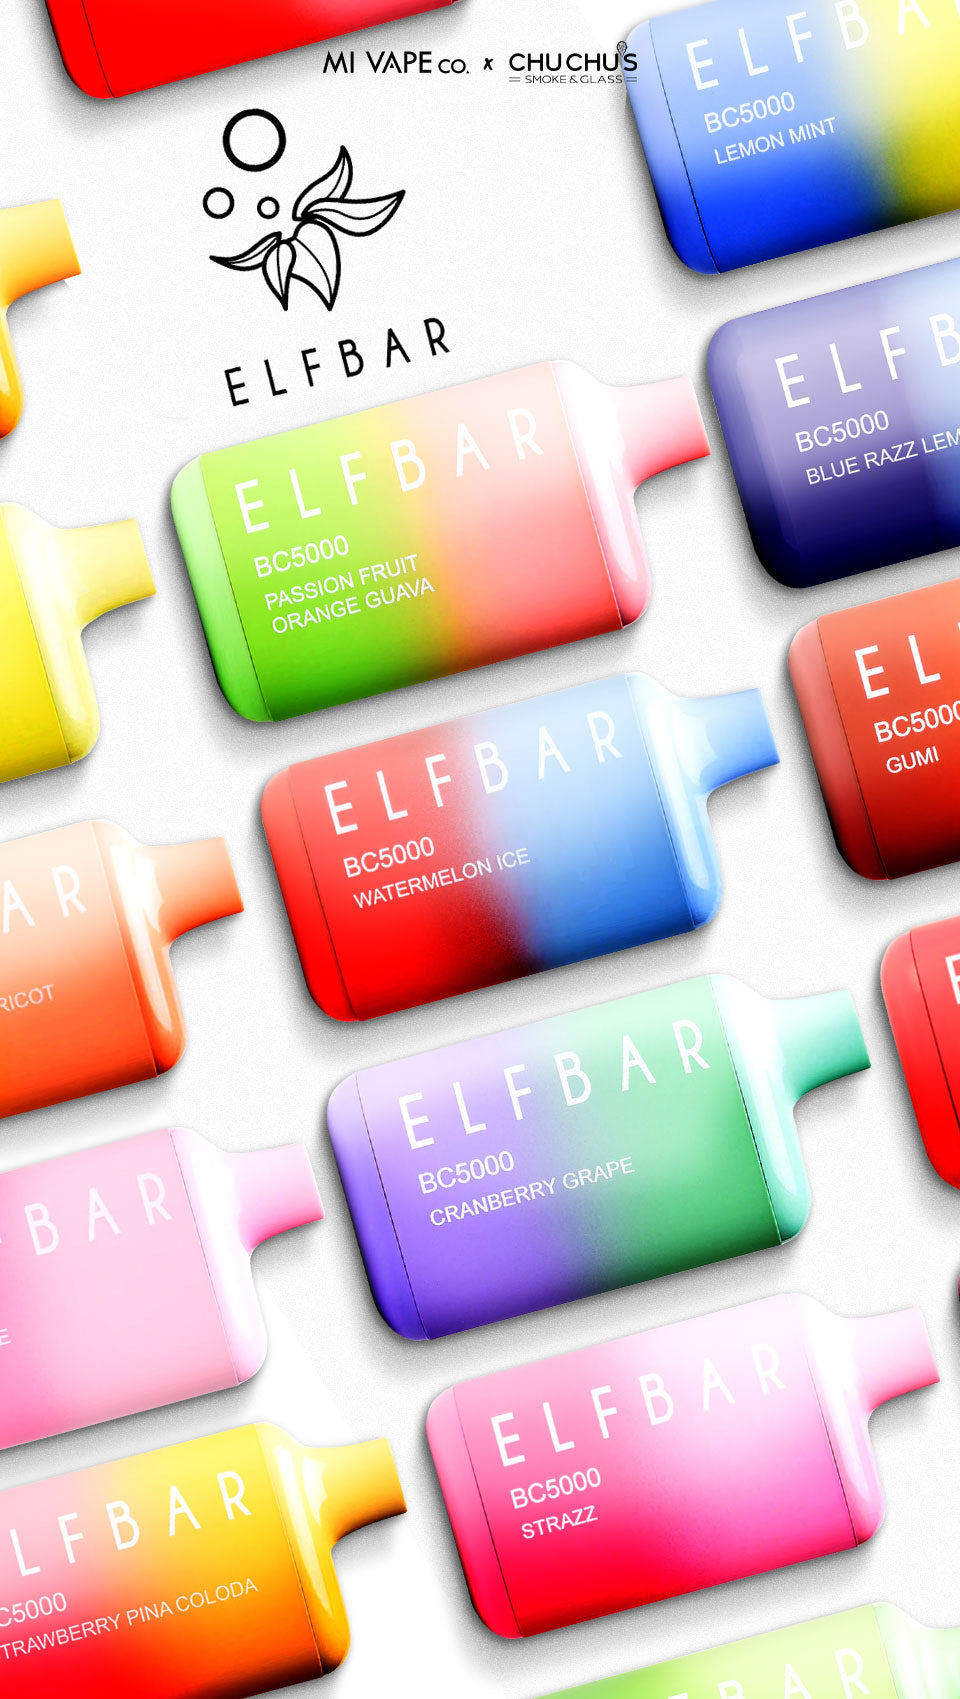 MIvapeco elf bar product banner image 